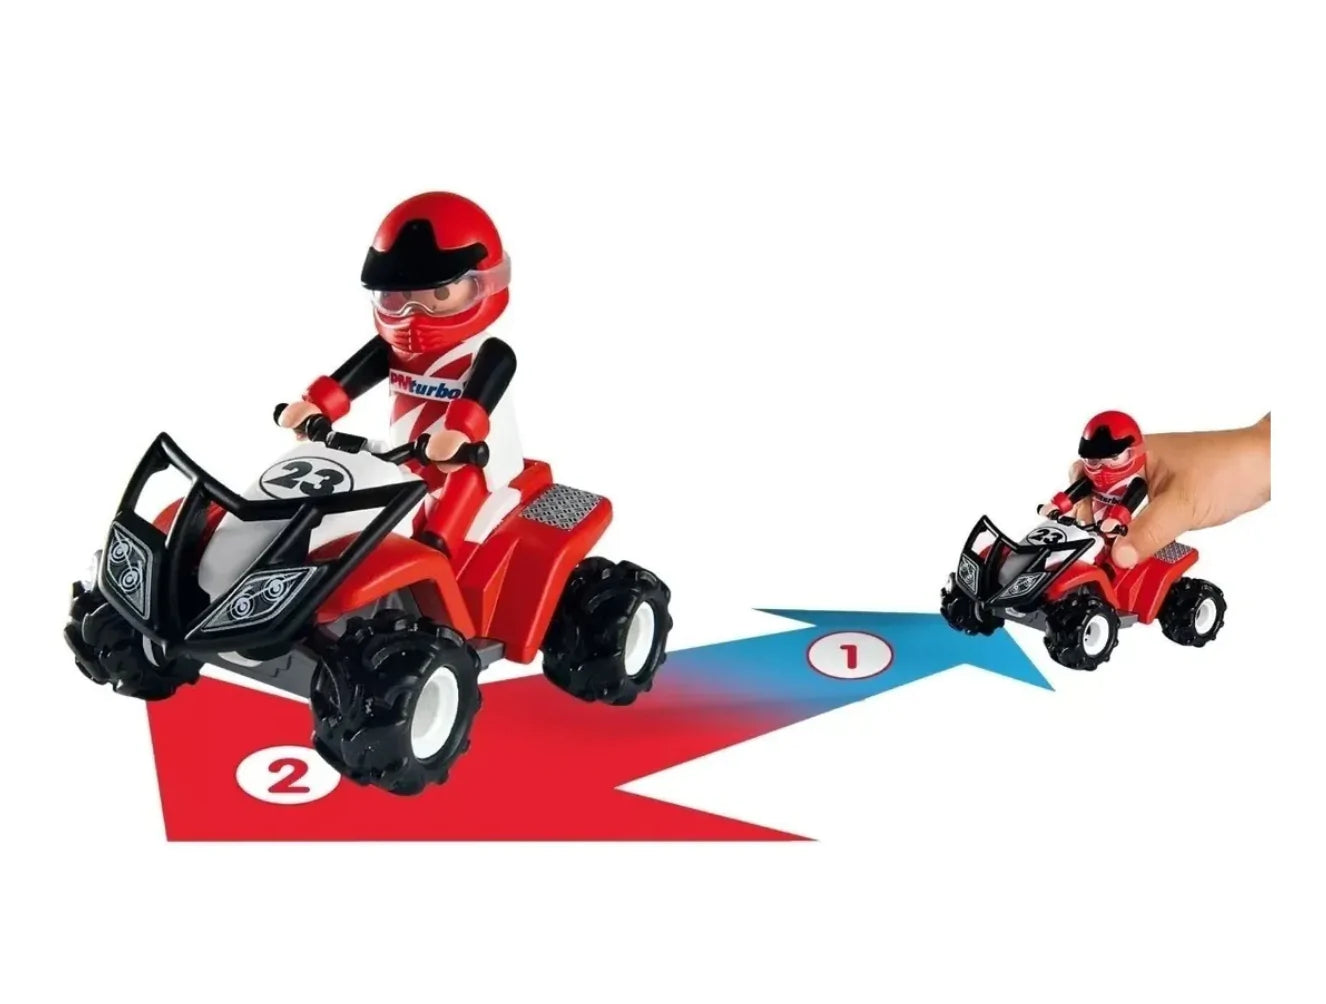 Playmobil Racing Quad Pull-Back